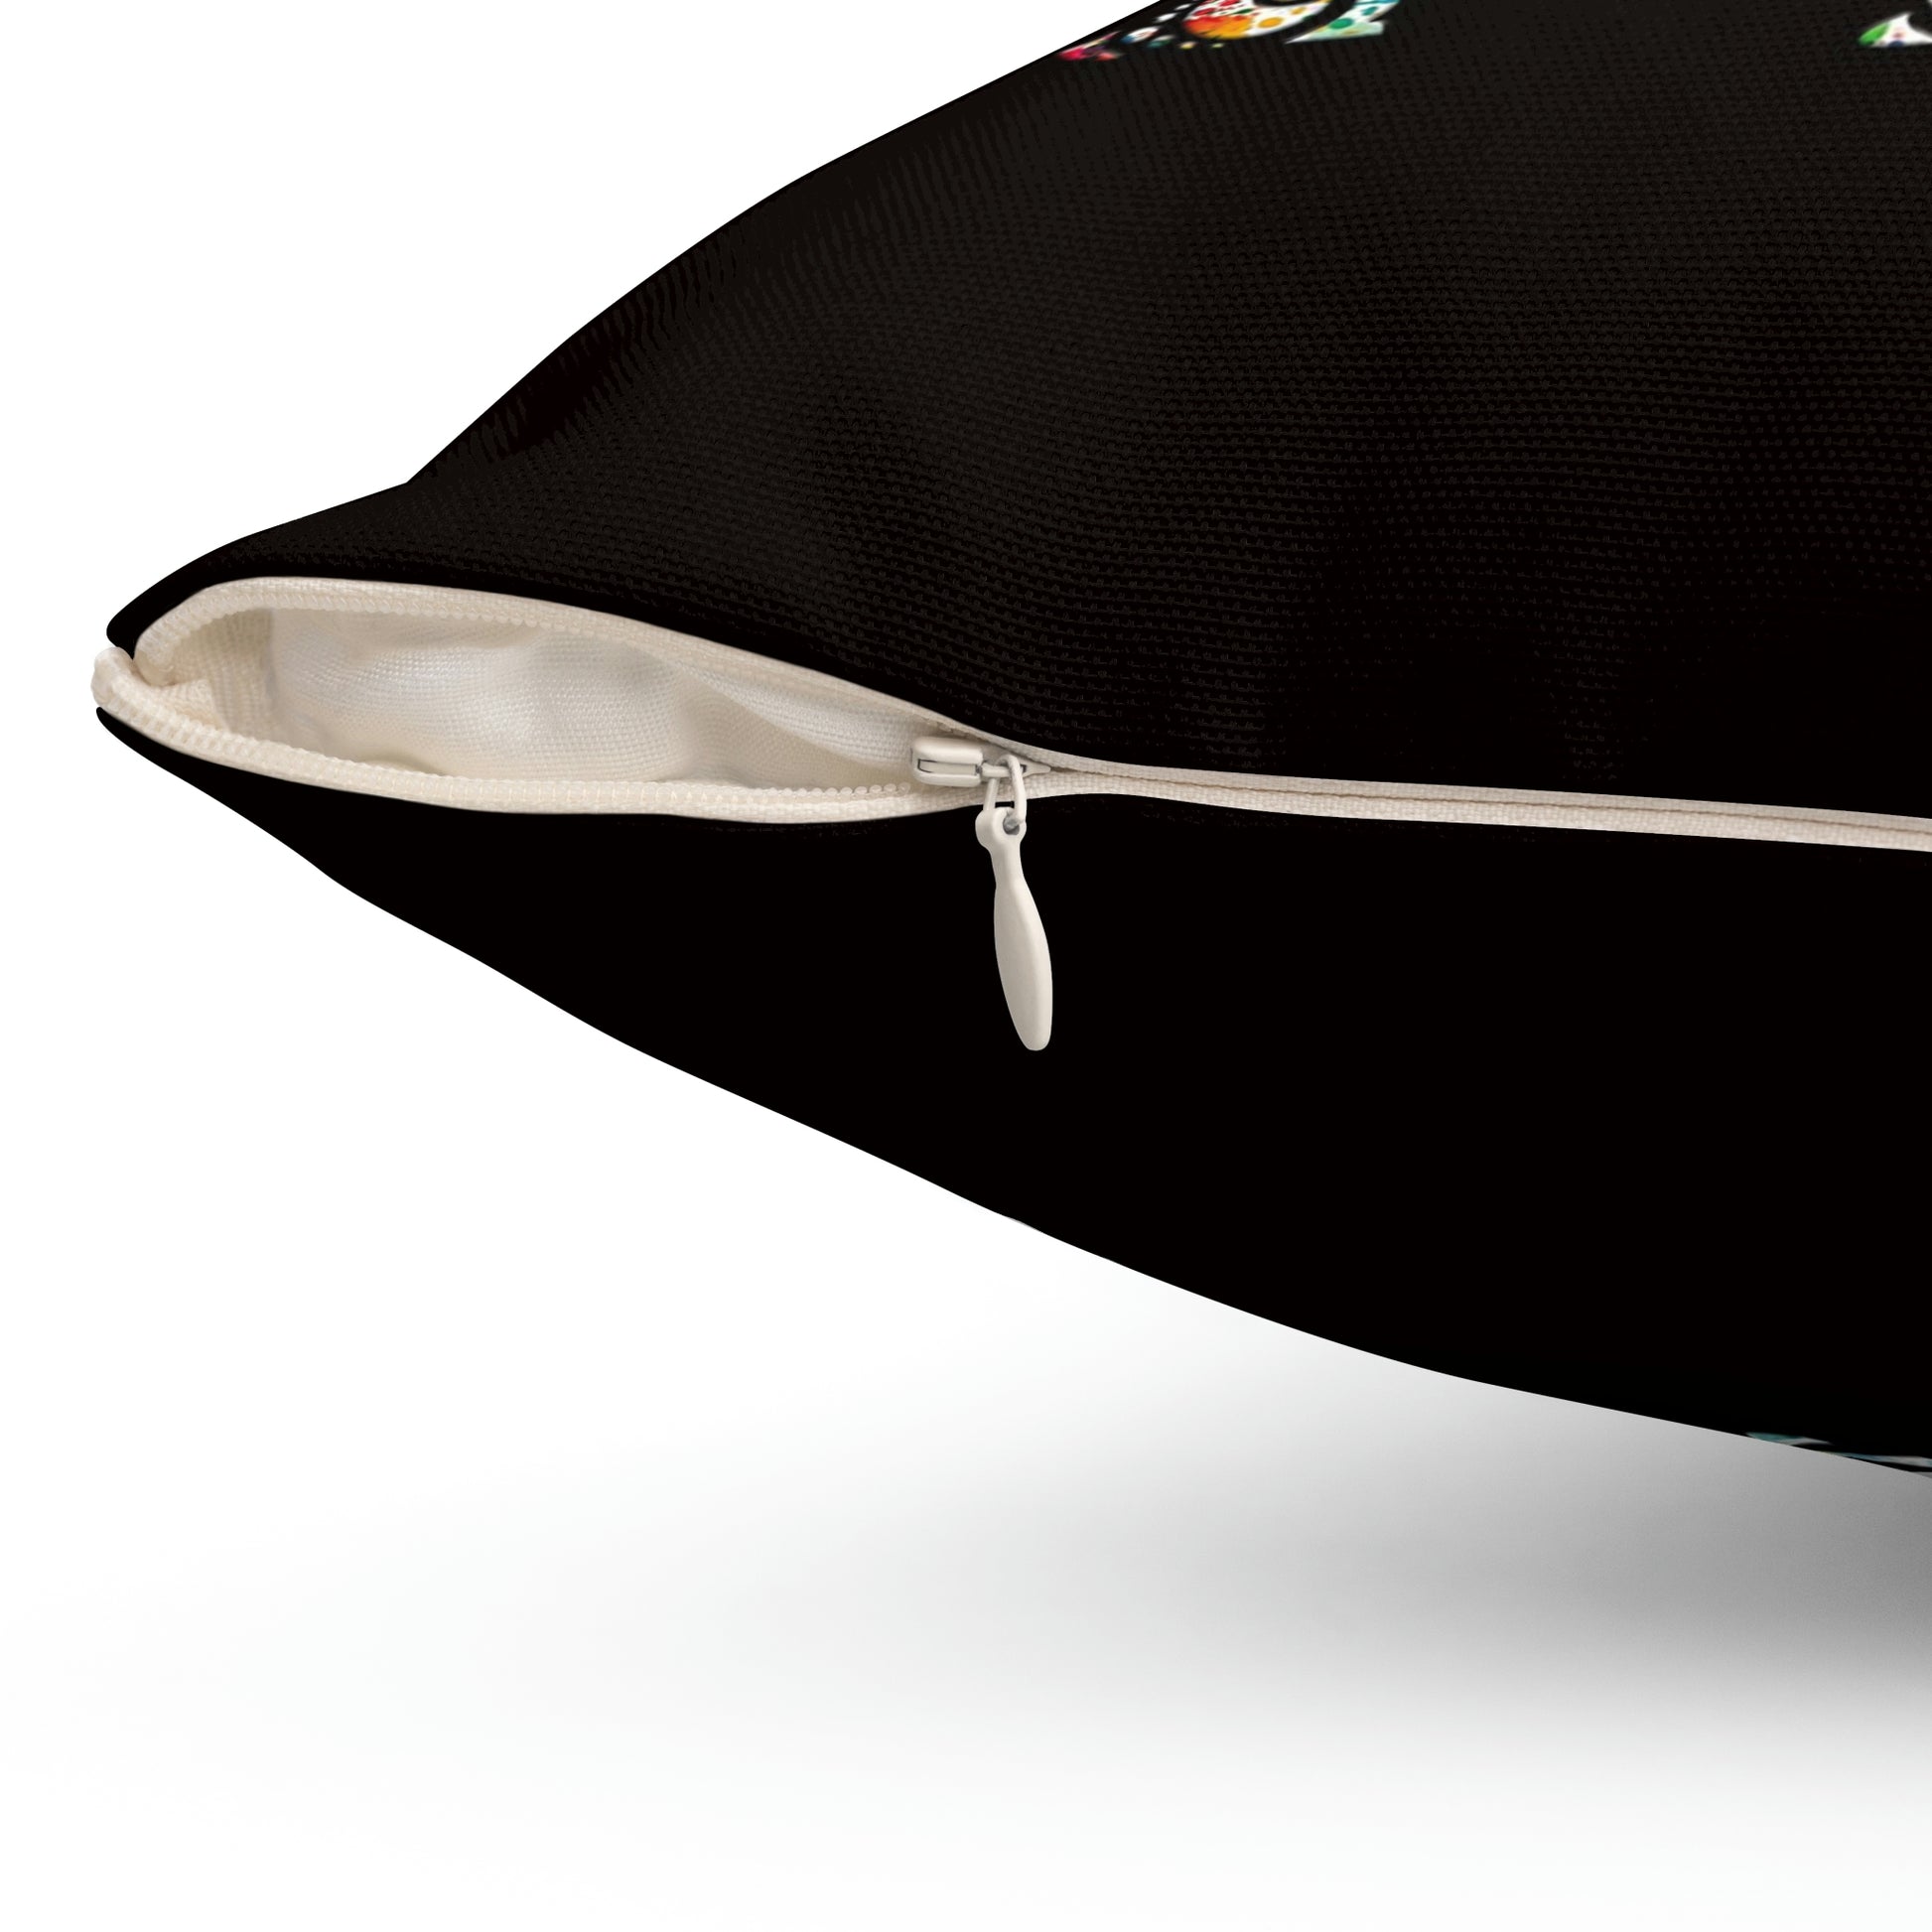 Multicolor Indian Elephant Mandala Style on Black Background Spun Polyester Square Pillow close up zipper